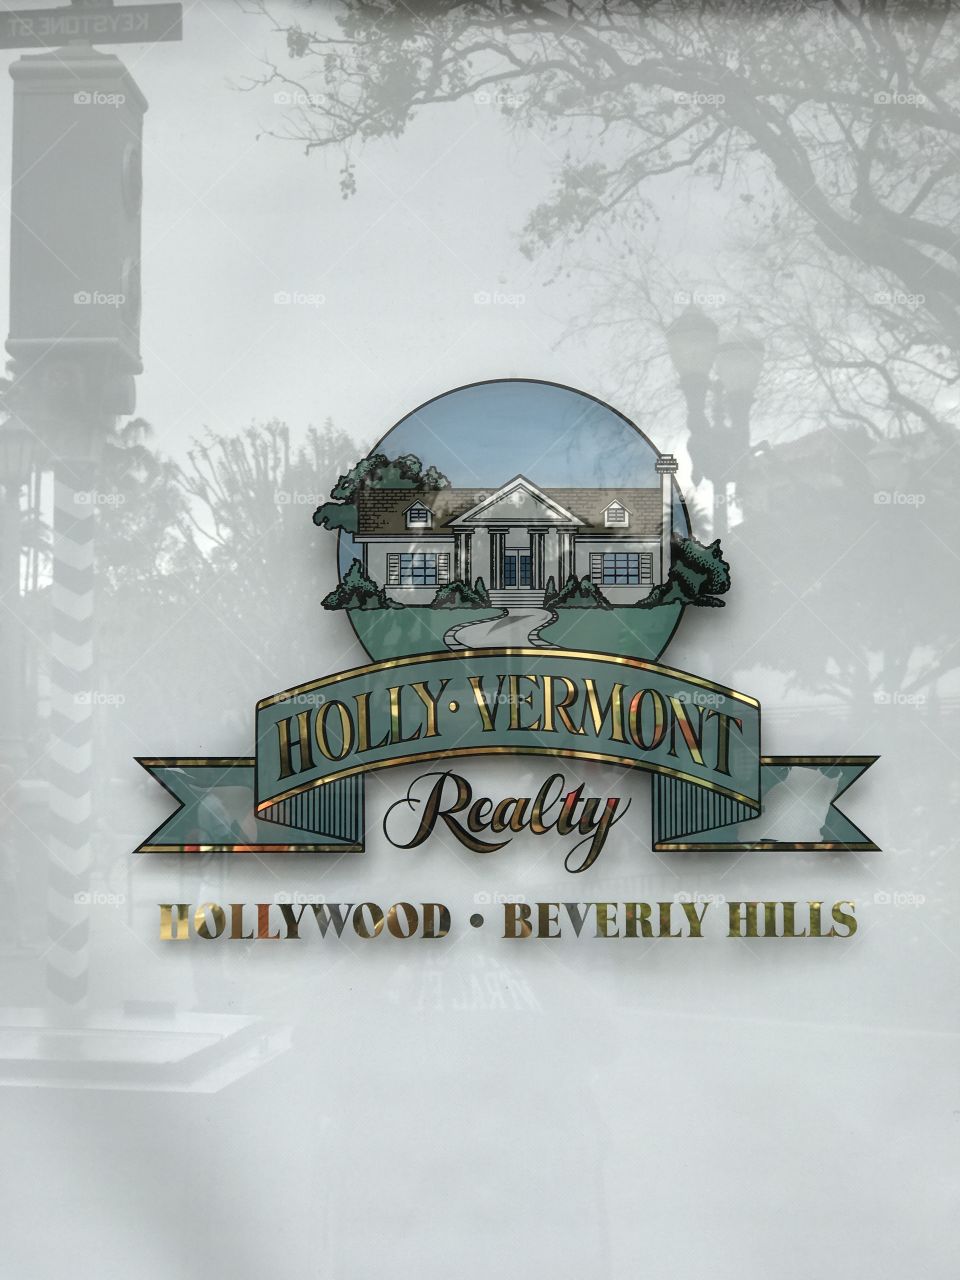 Hollywood studios in the Walt Disney World resort located in Orlando, Florida USA.